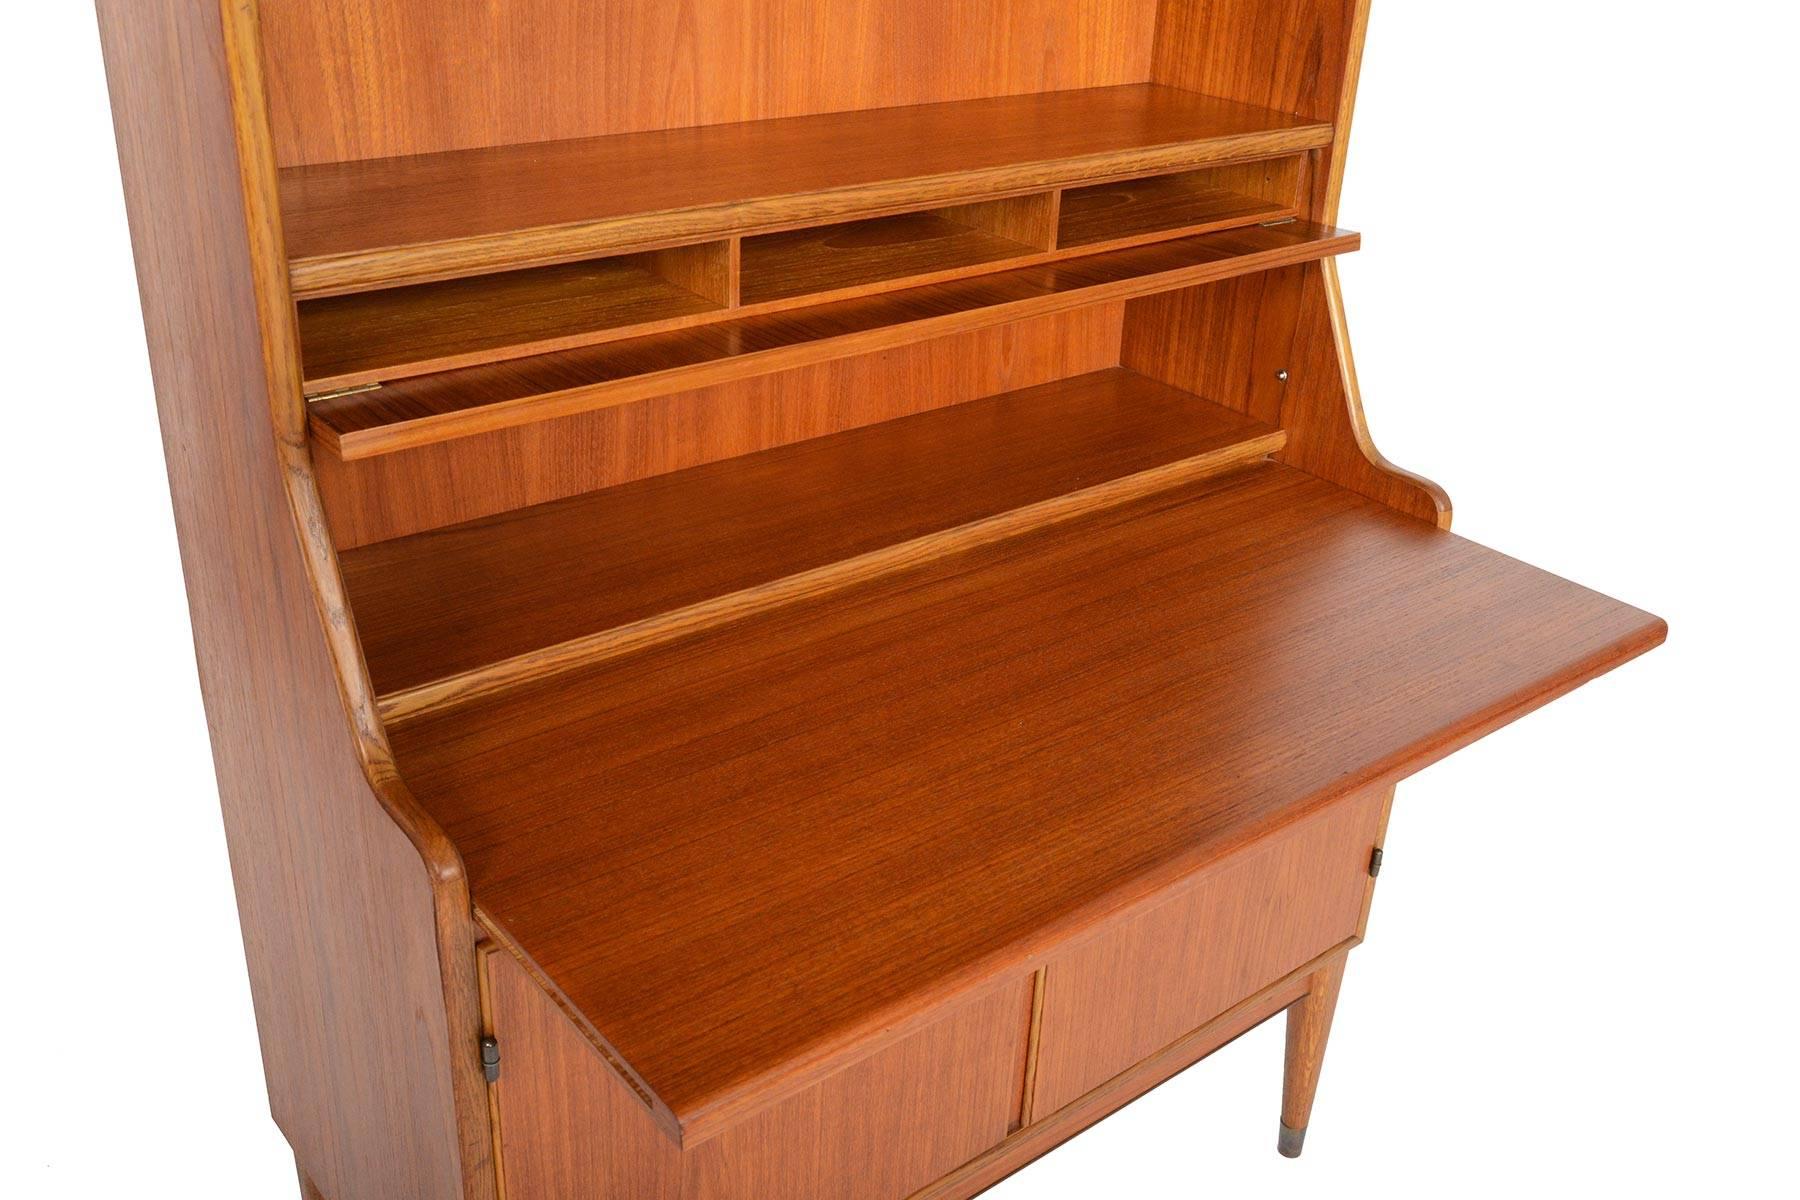 Mid-20th Century Danish Modern Teak and Oak Bookcase Secretary with Hidden Storage